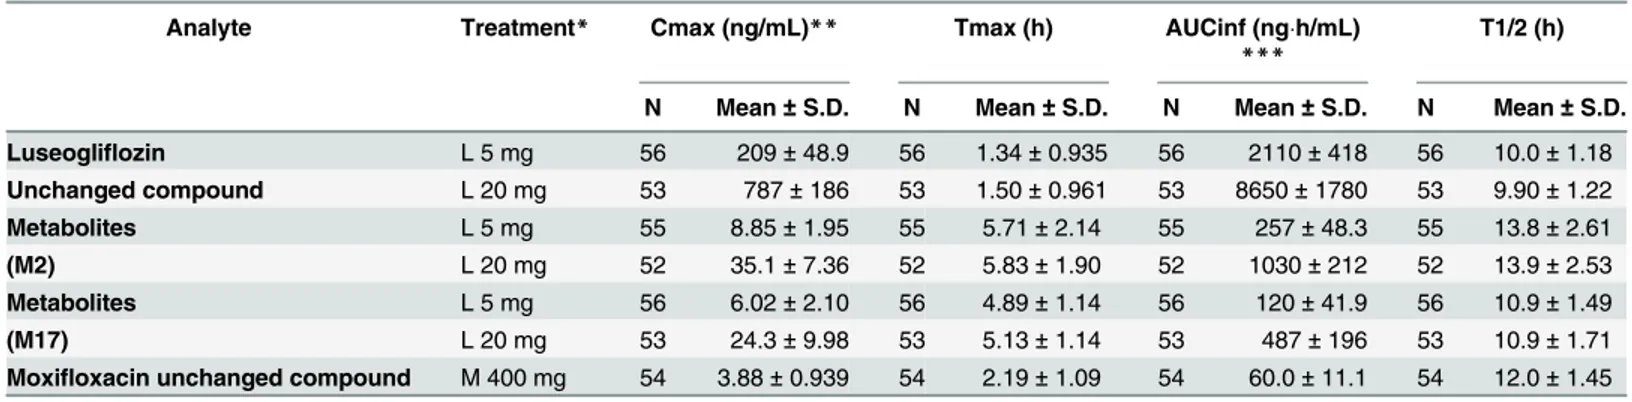 Table 2. Pharmacokinetic parameters of luseogliflozin and its metabolites (M2, M17) and moxifloxacin.